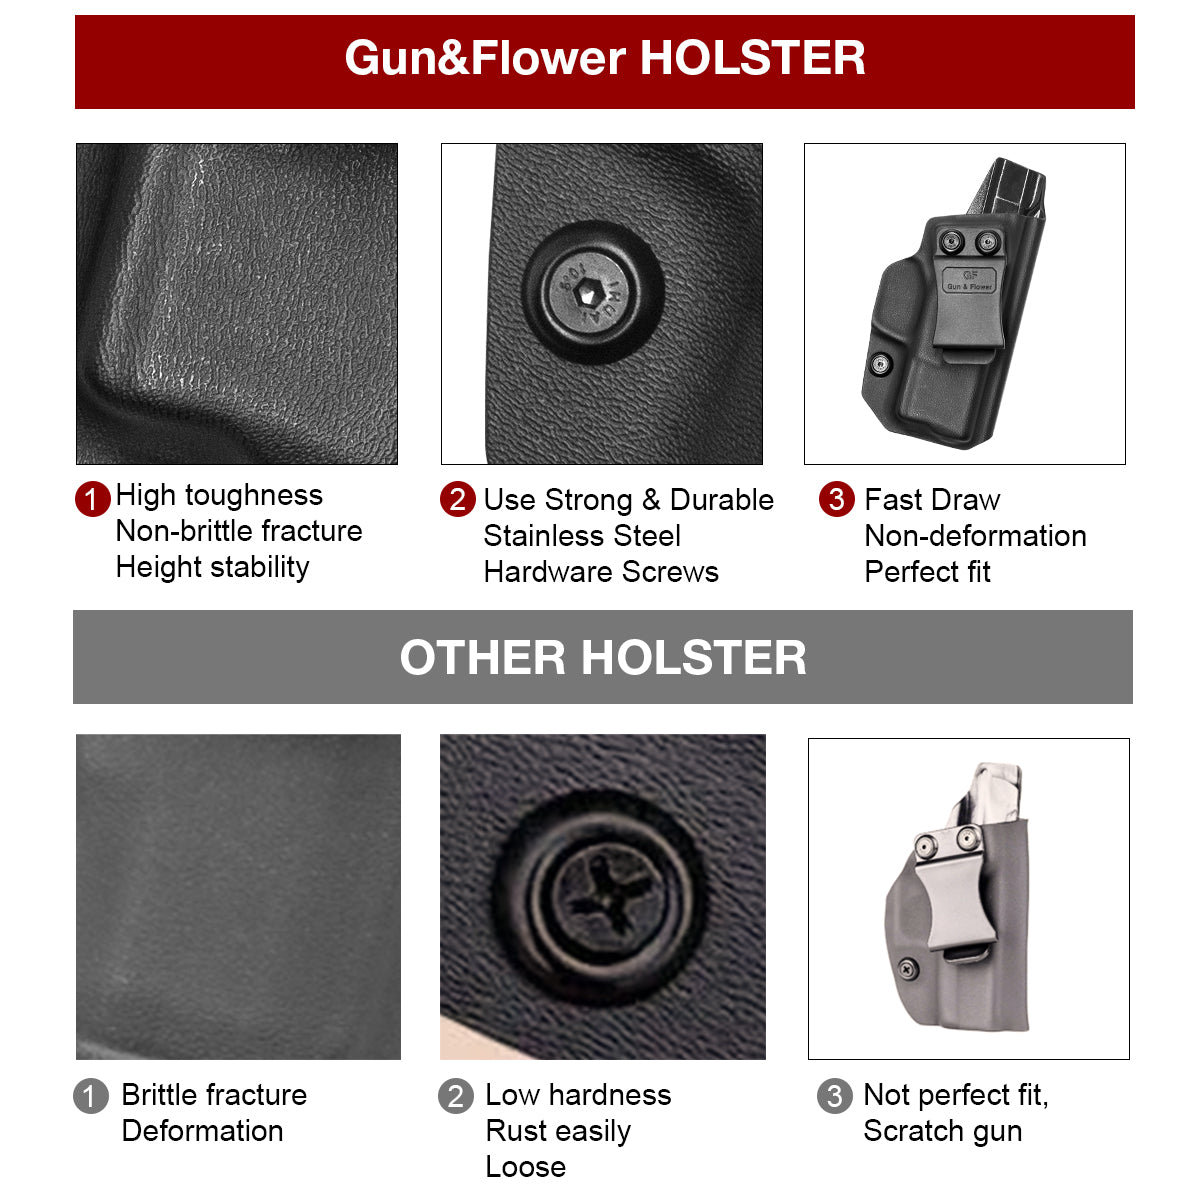 3/8 Gun Holster Accessory Screws & Nuts Hardware - Fits